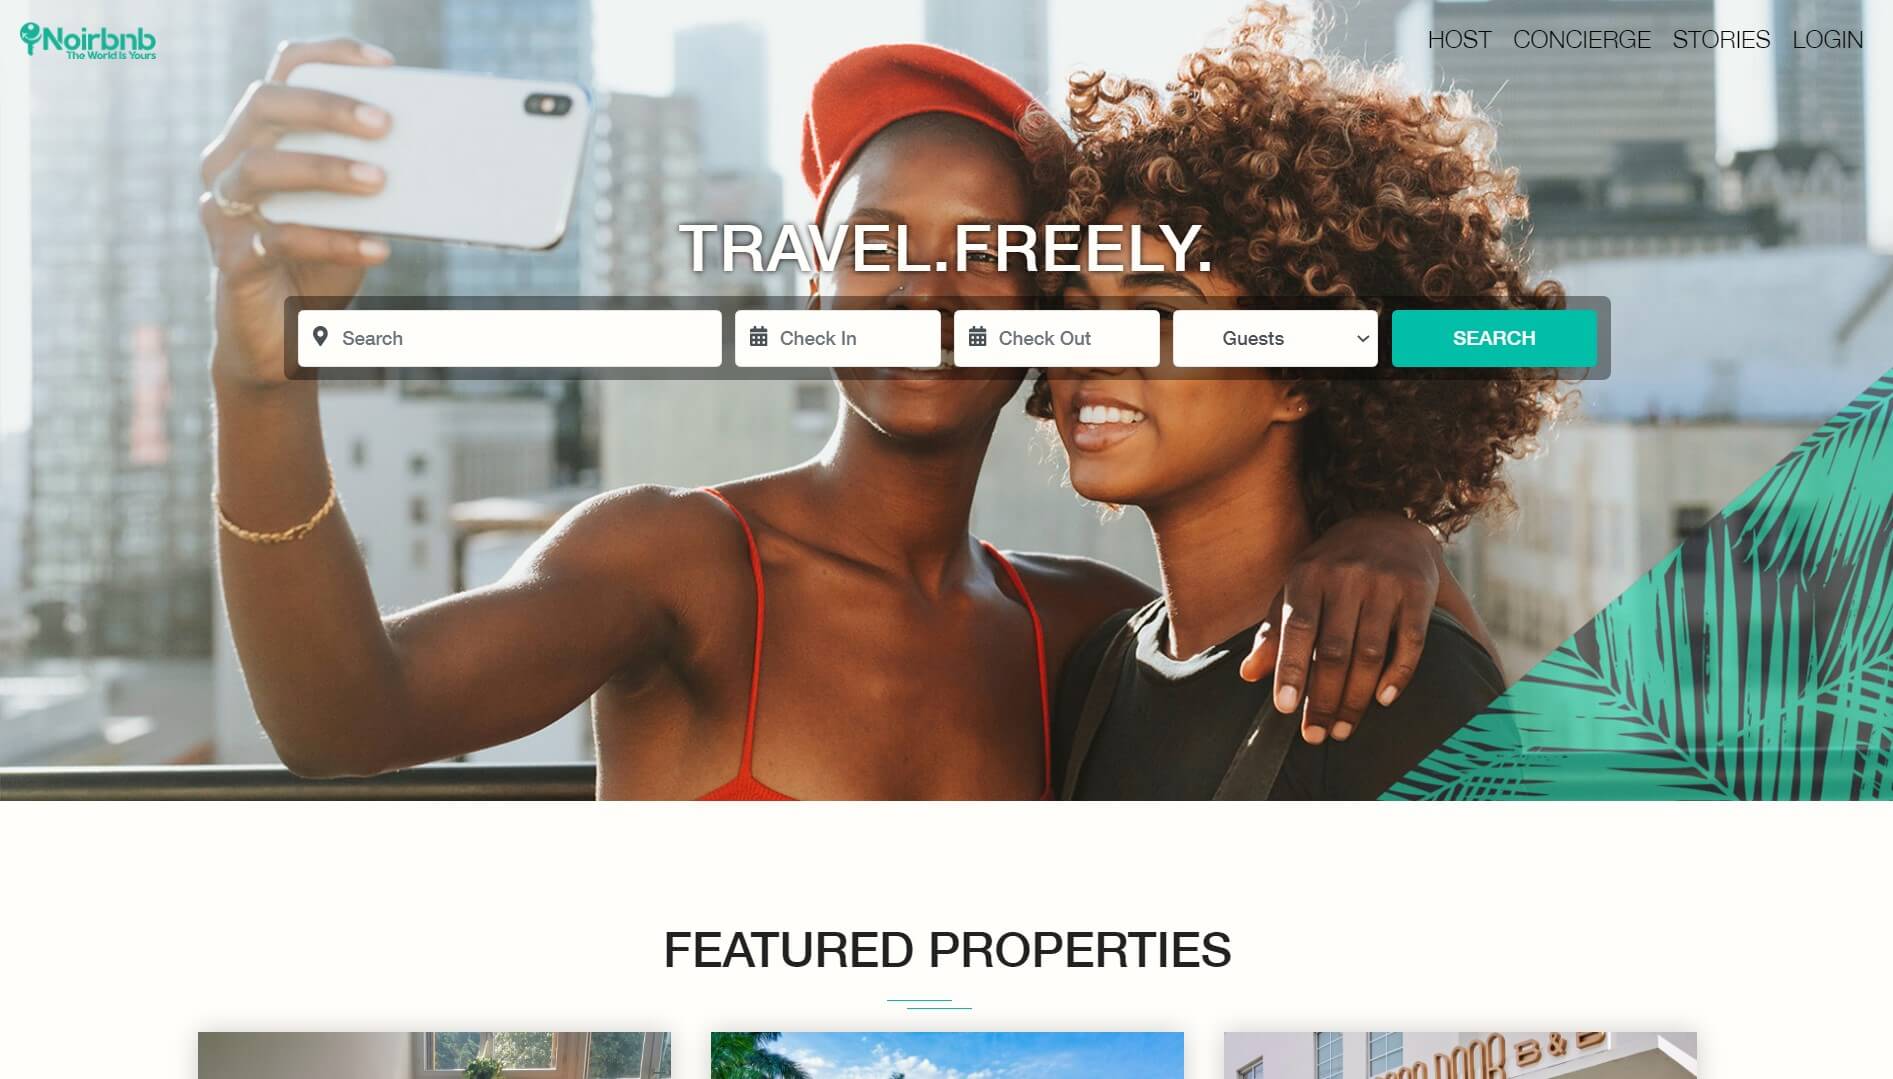 Noirbnb homepage - Airbnb for black people